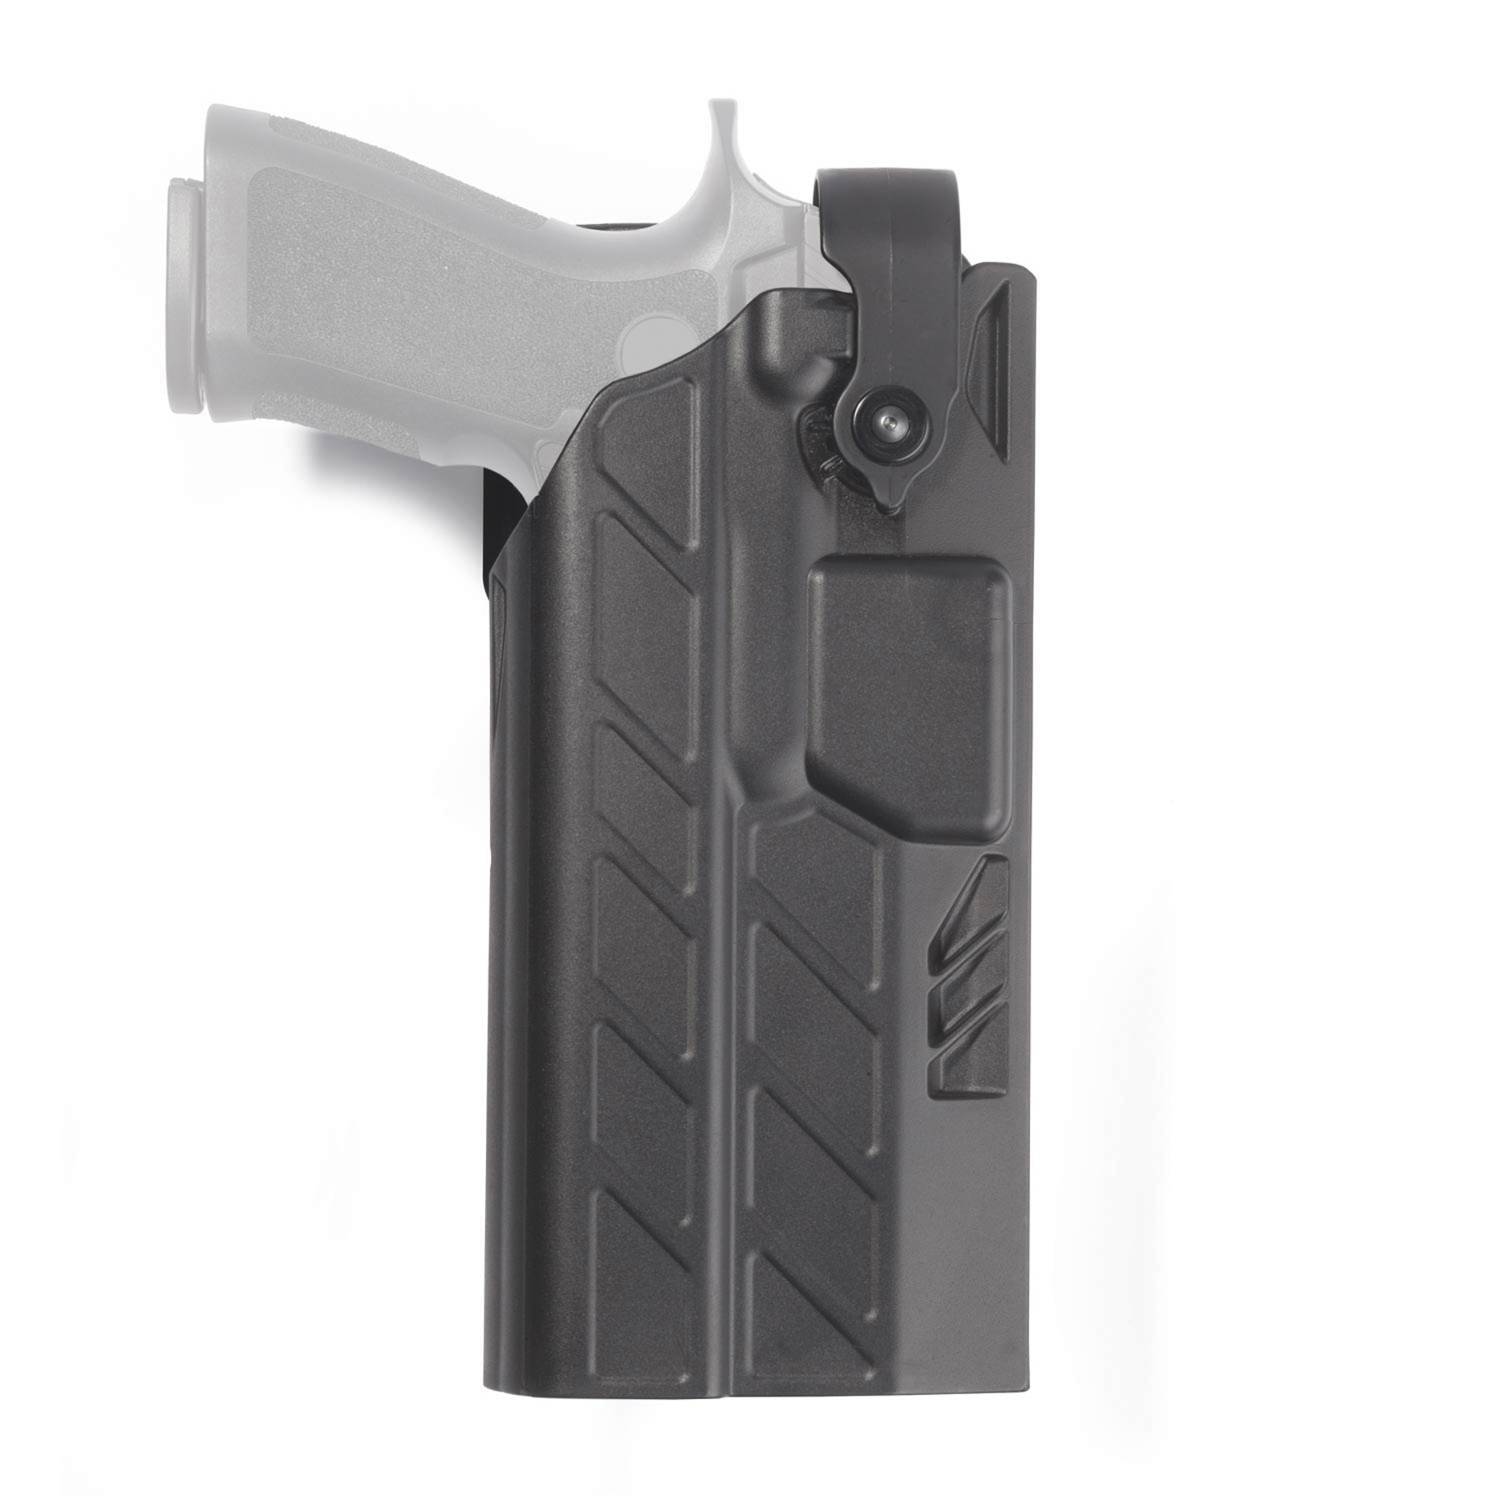 Glock 22 Gen 5 Holsters, Buy 115 Concealed carry Holsters for Glock 22 Gen  5 Online